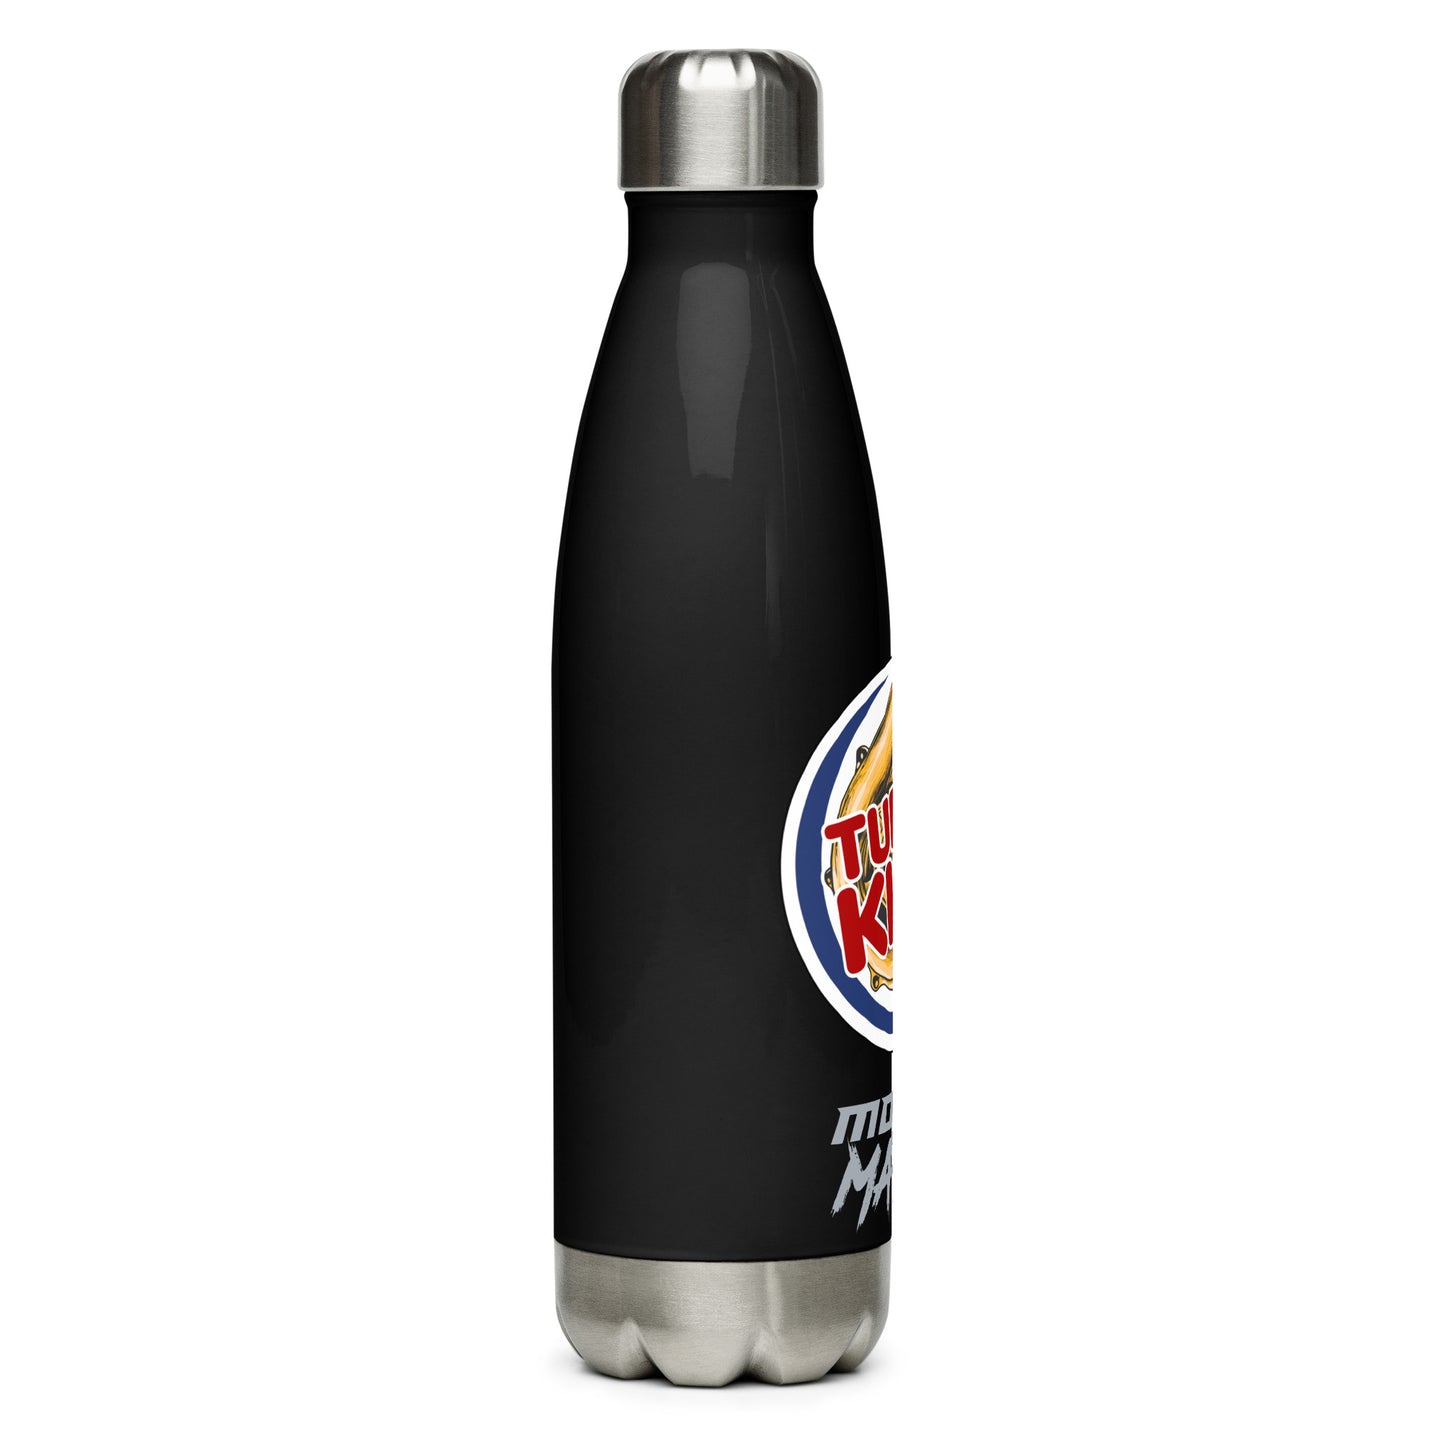 Turbo King Stainless Steel Water Bottle